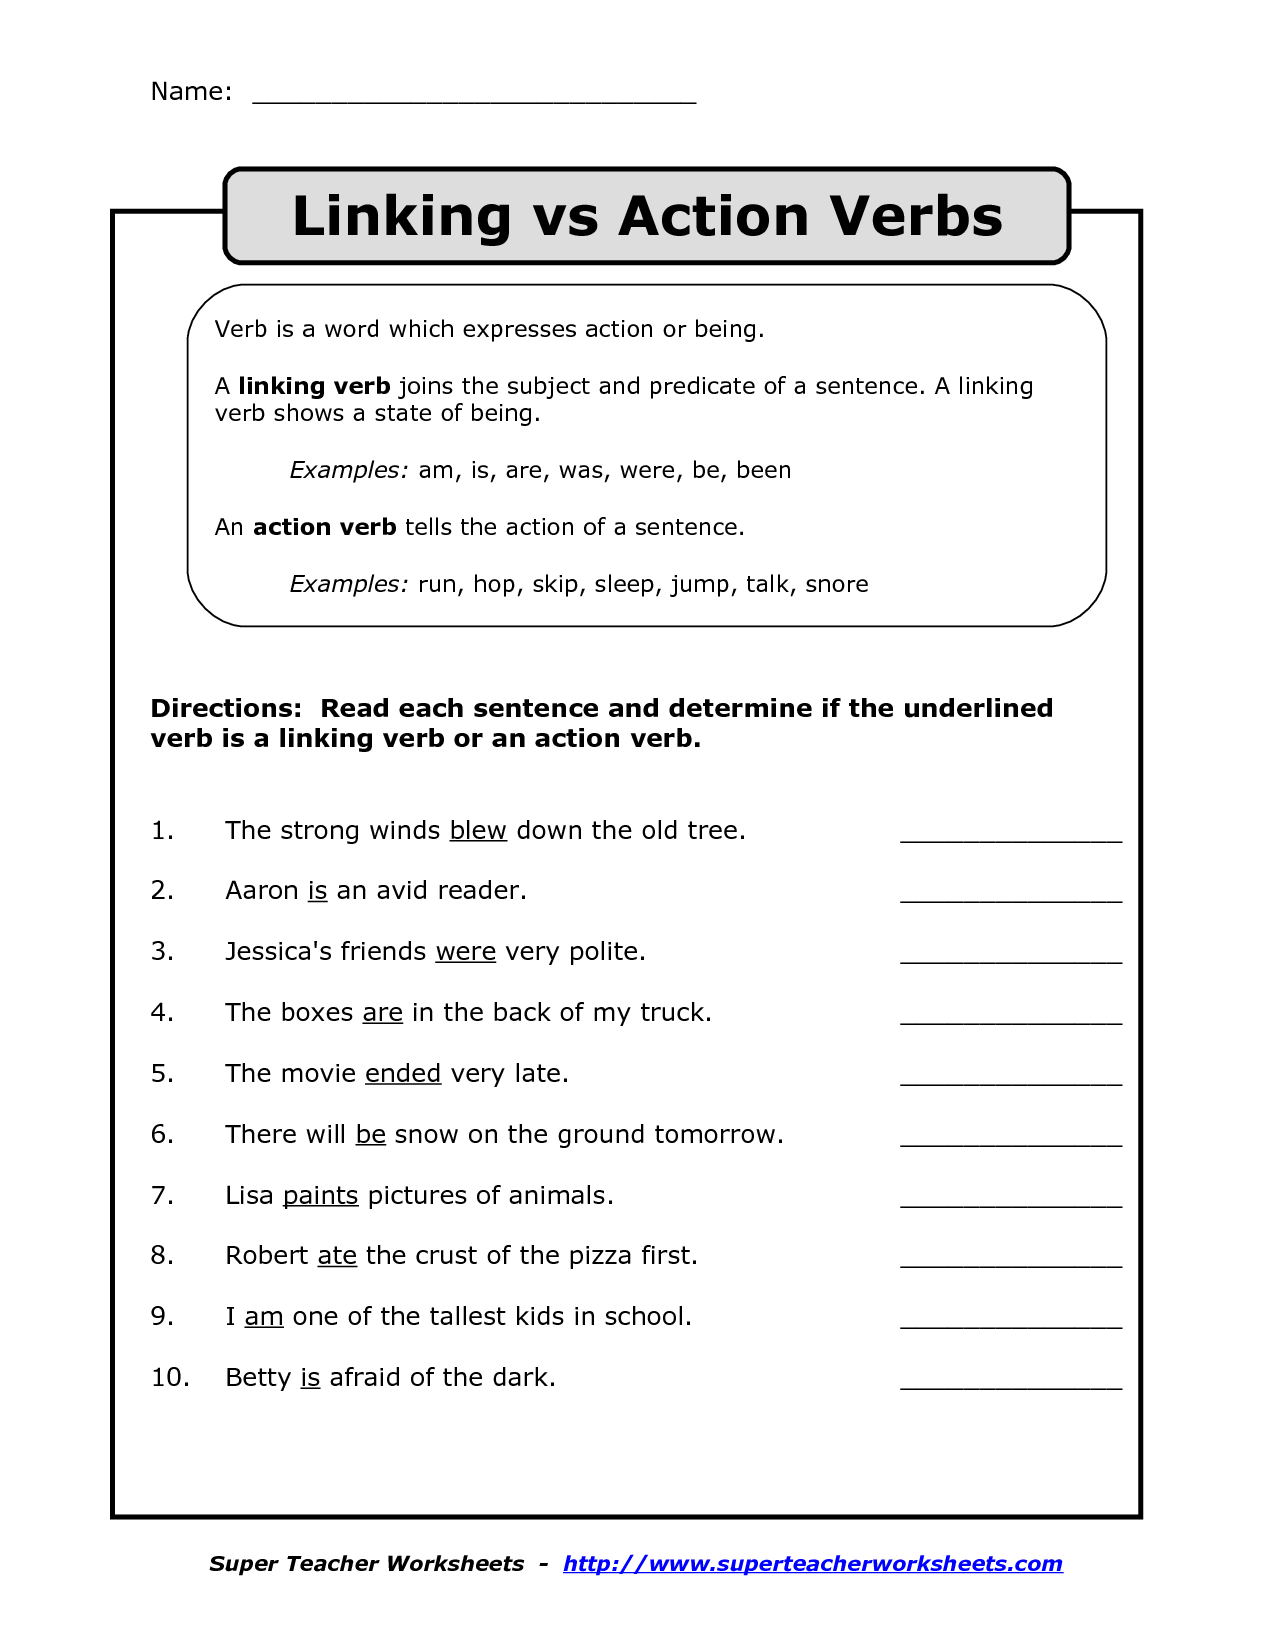 Action Linking Verb Worksheet Image